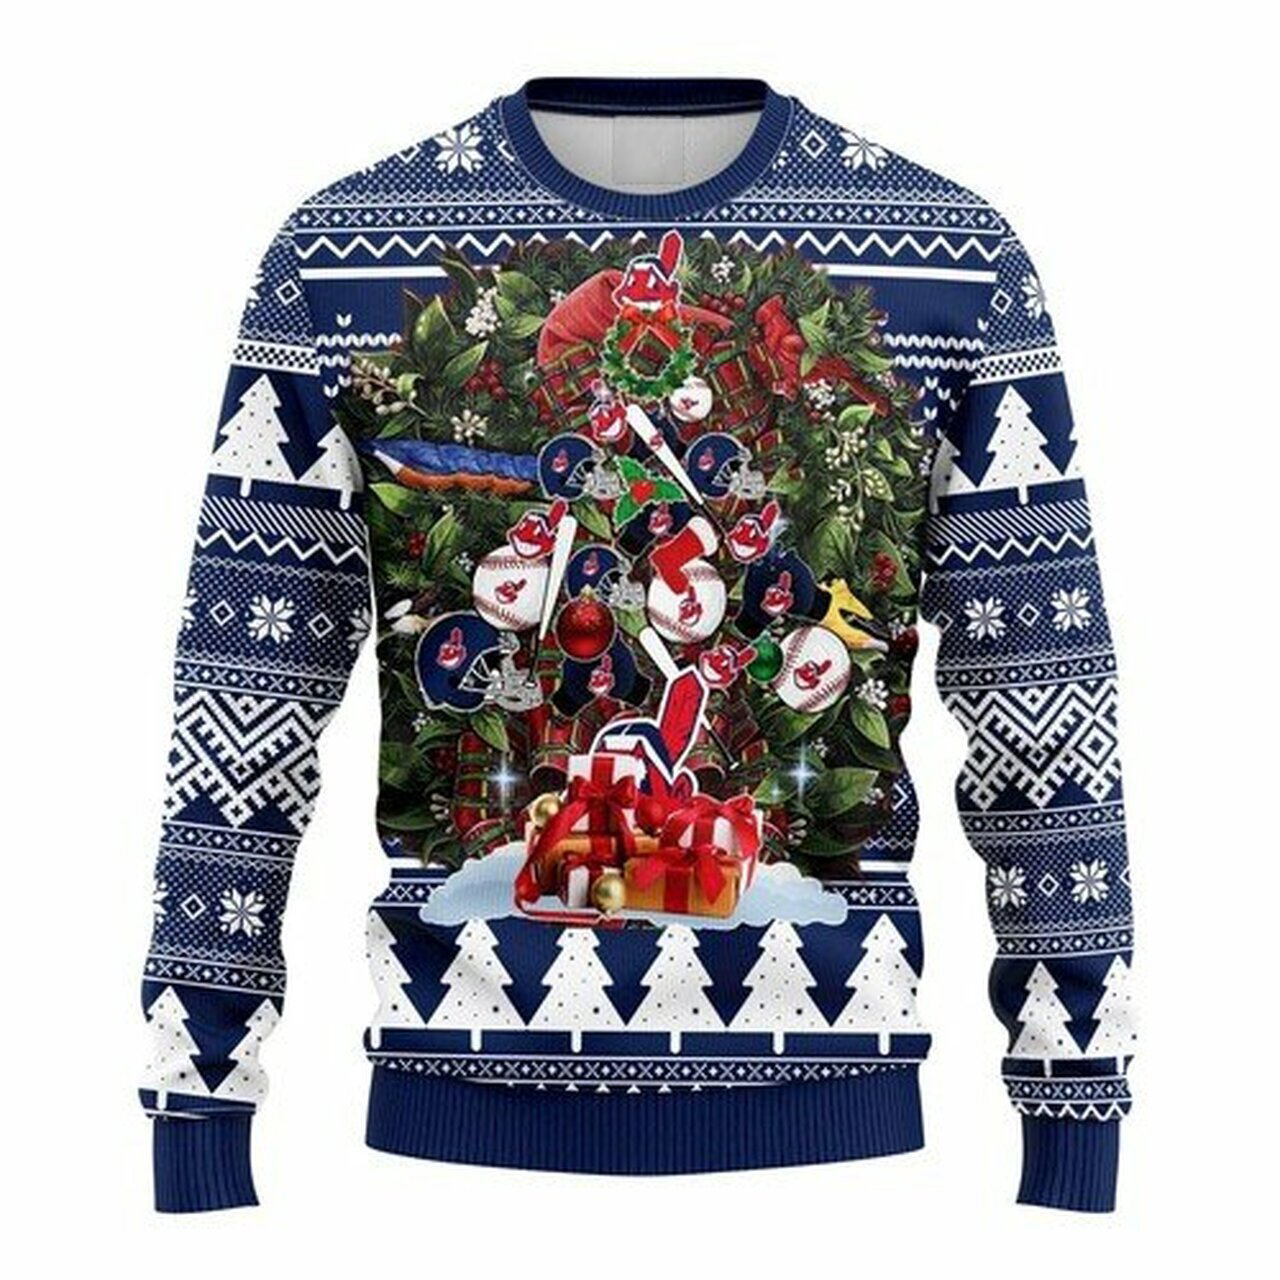 [ HOT ] MLB Cleveland Indians christmas tree ugly sweater – Saleoff 050122